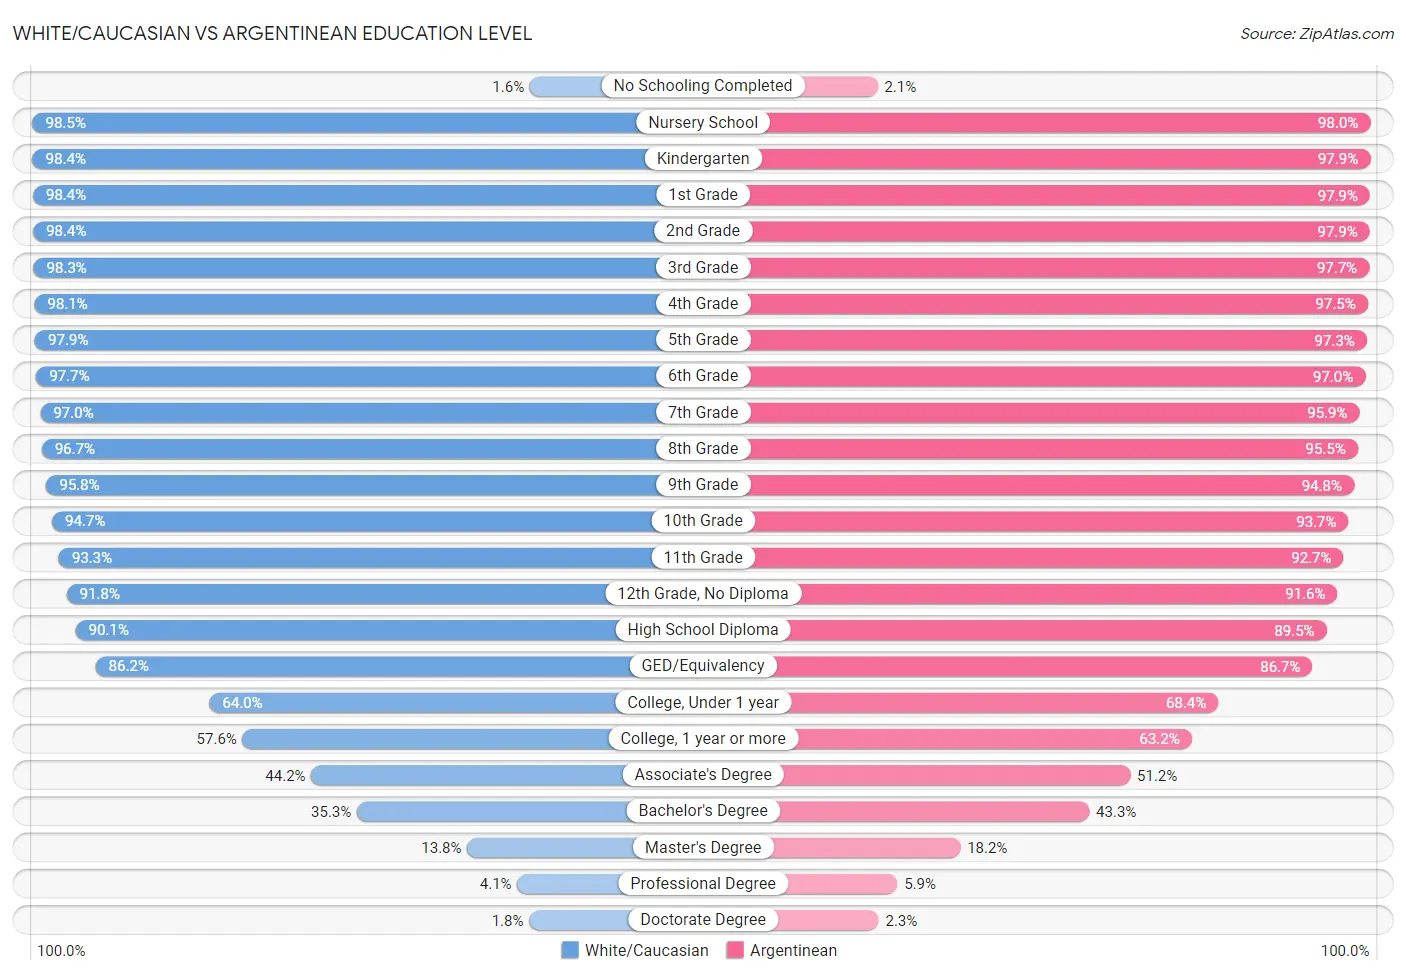 White/Caucasian vs Argentinean Education Level